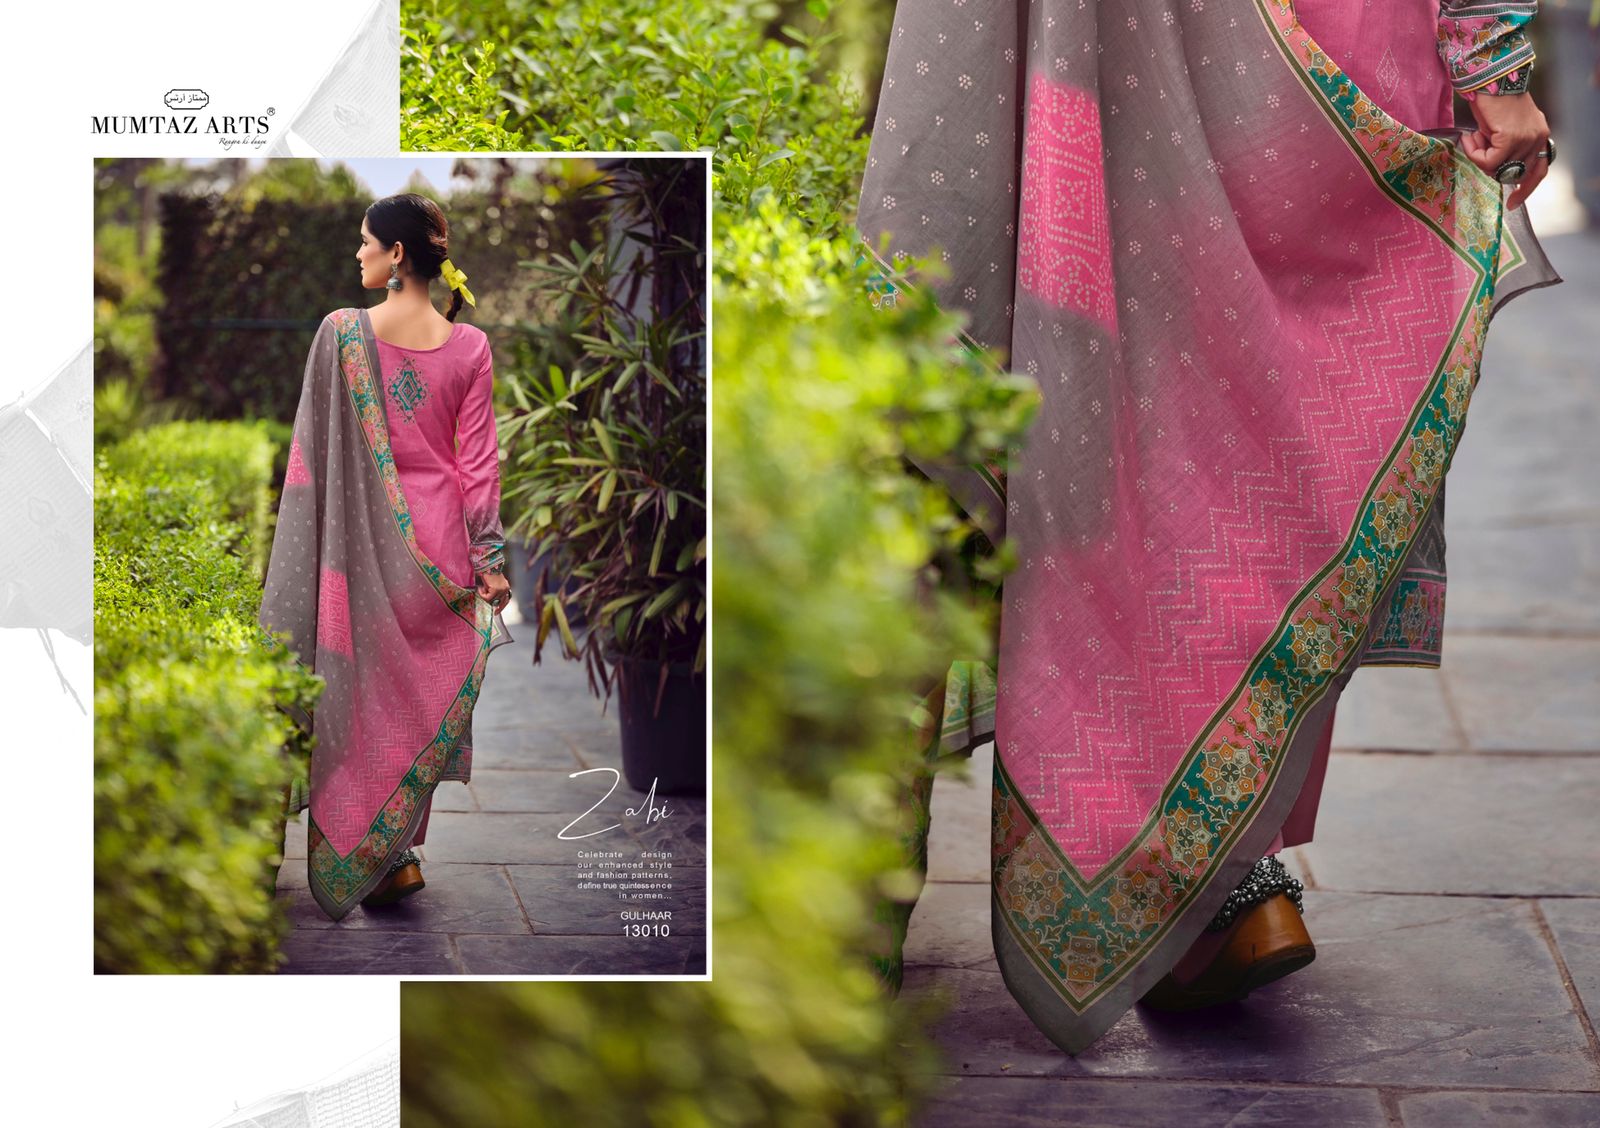 mumtaz art jash e banhani vol 3 gulhaar cotton exclusive print salwar suit catalog